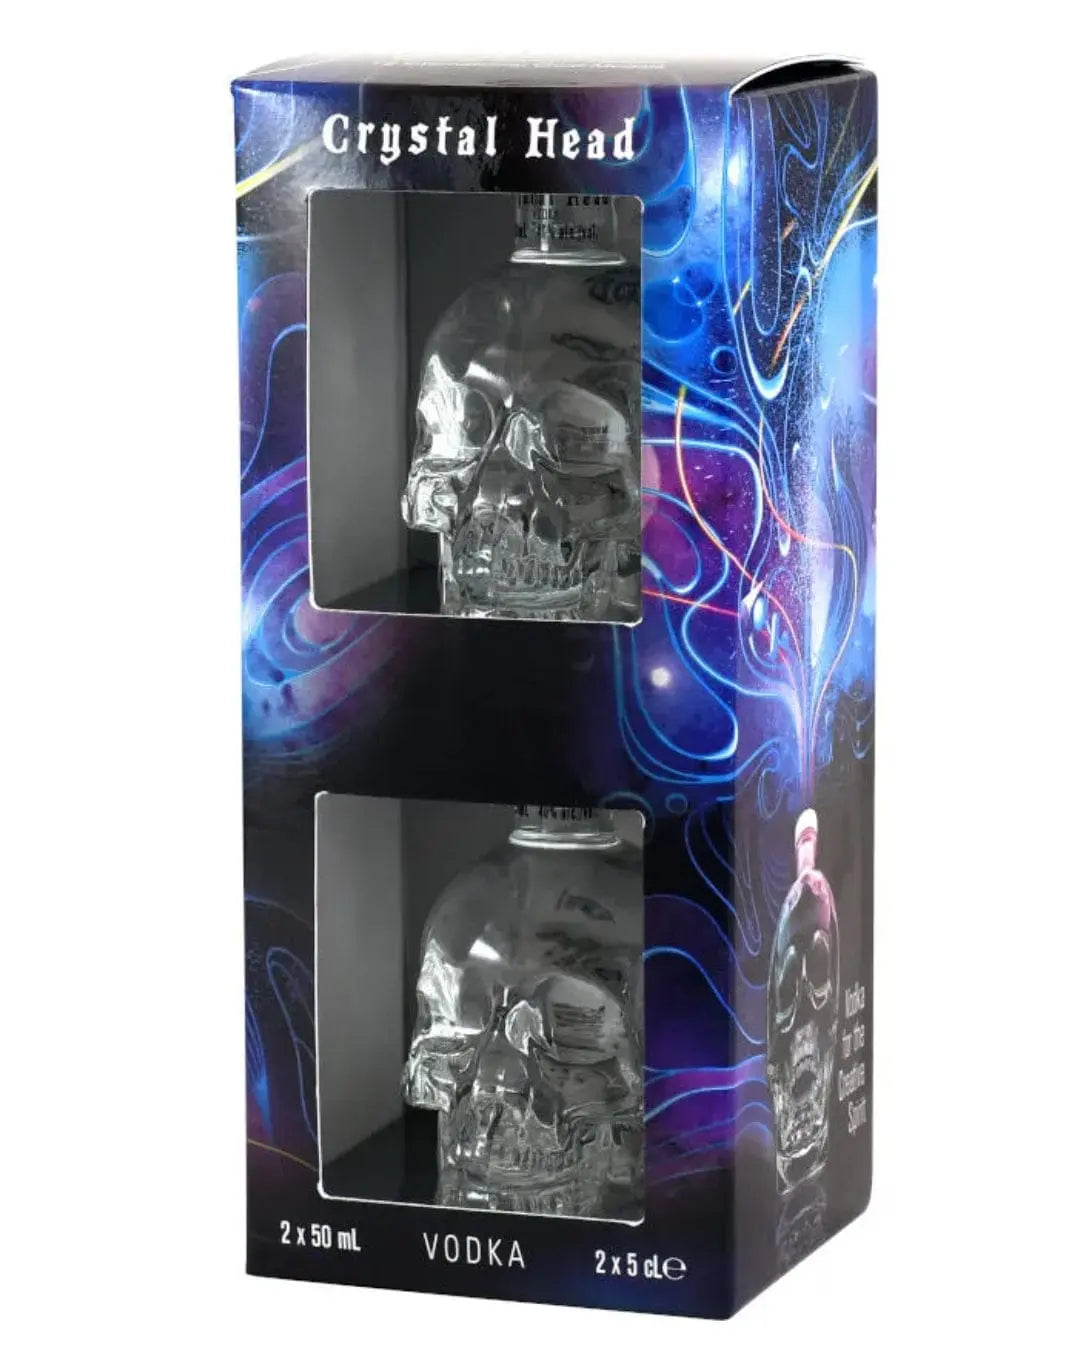 Crystal Head Vodka Miniature Gift Pack, 2 x 5 cl Spirits